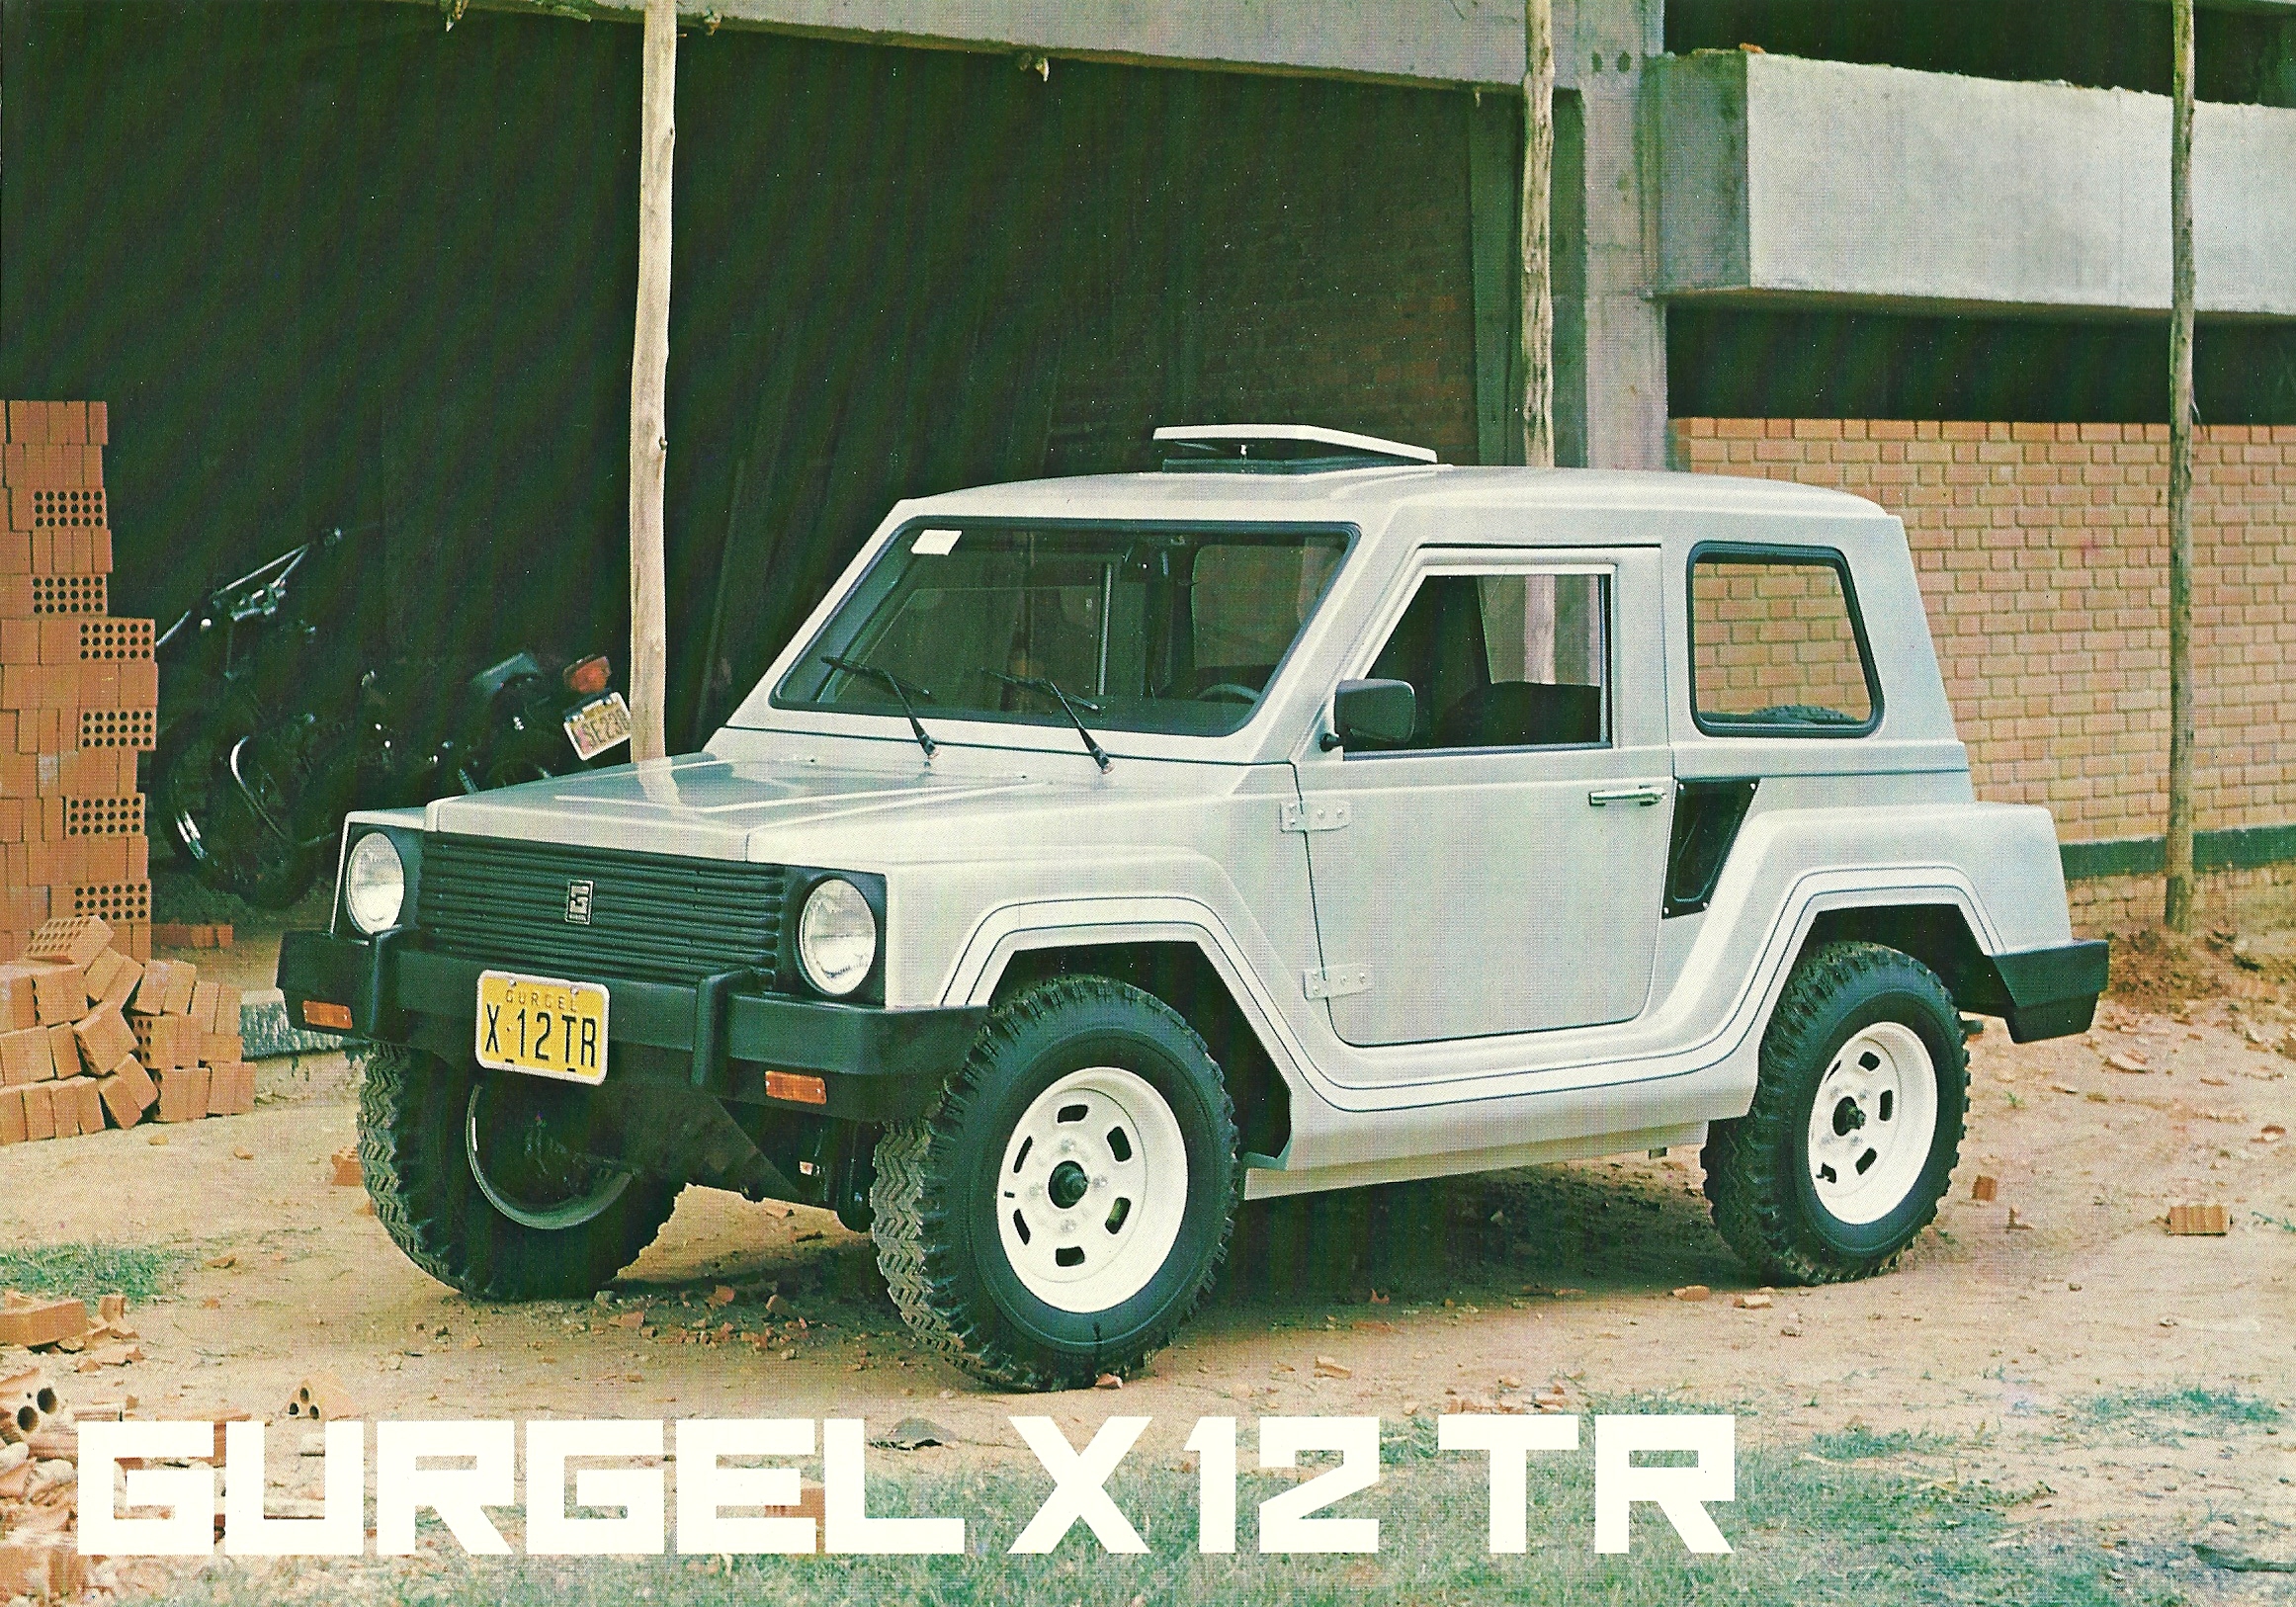 Gurgel X 15 TR